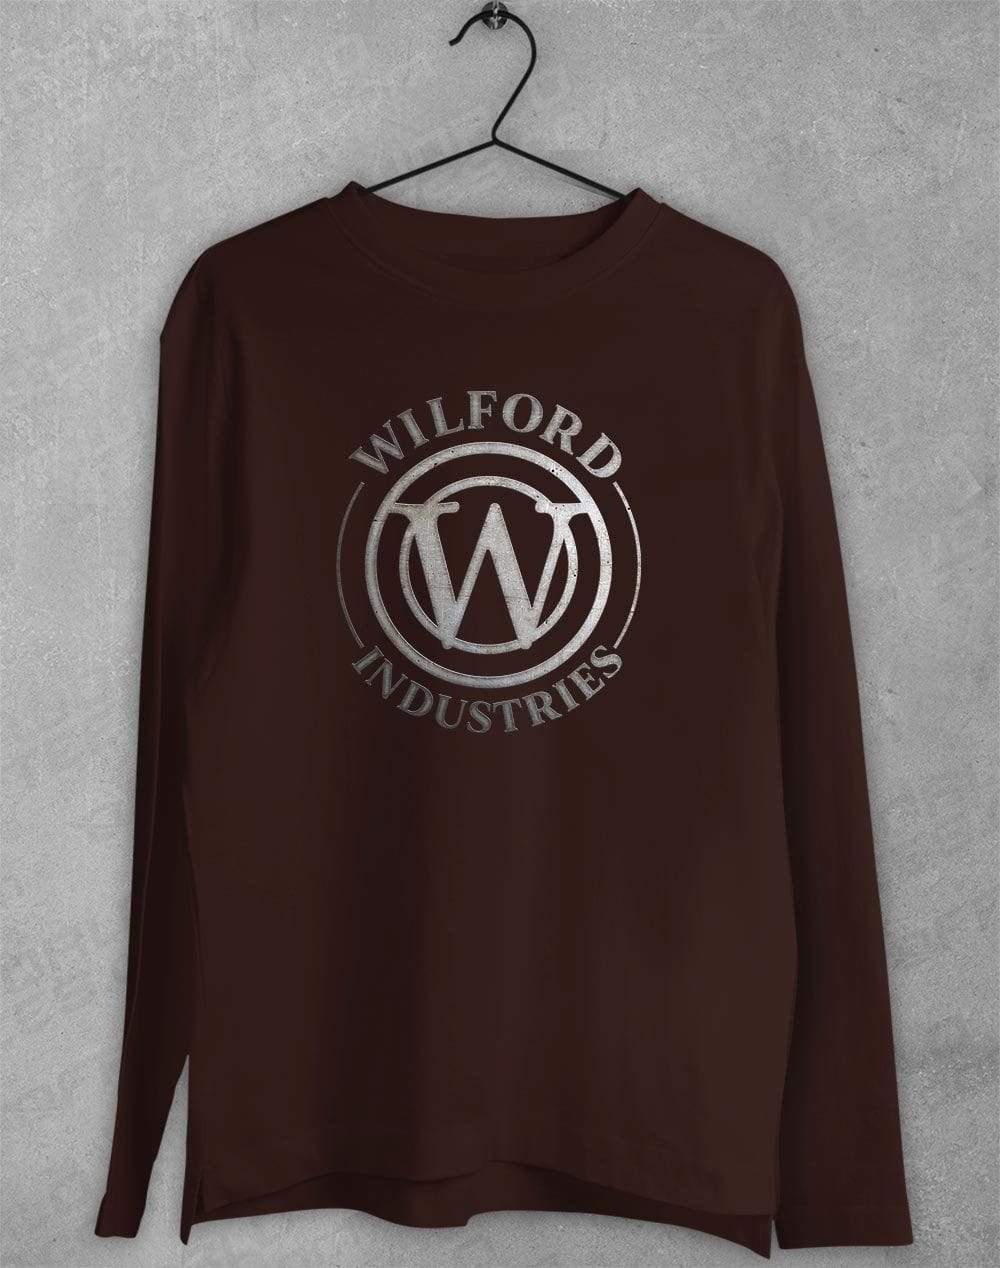 Wilford Industries Long Sleeve T-Shirt S / Dark Chocolate  - Off World Tees